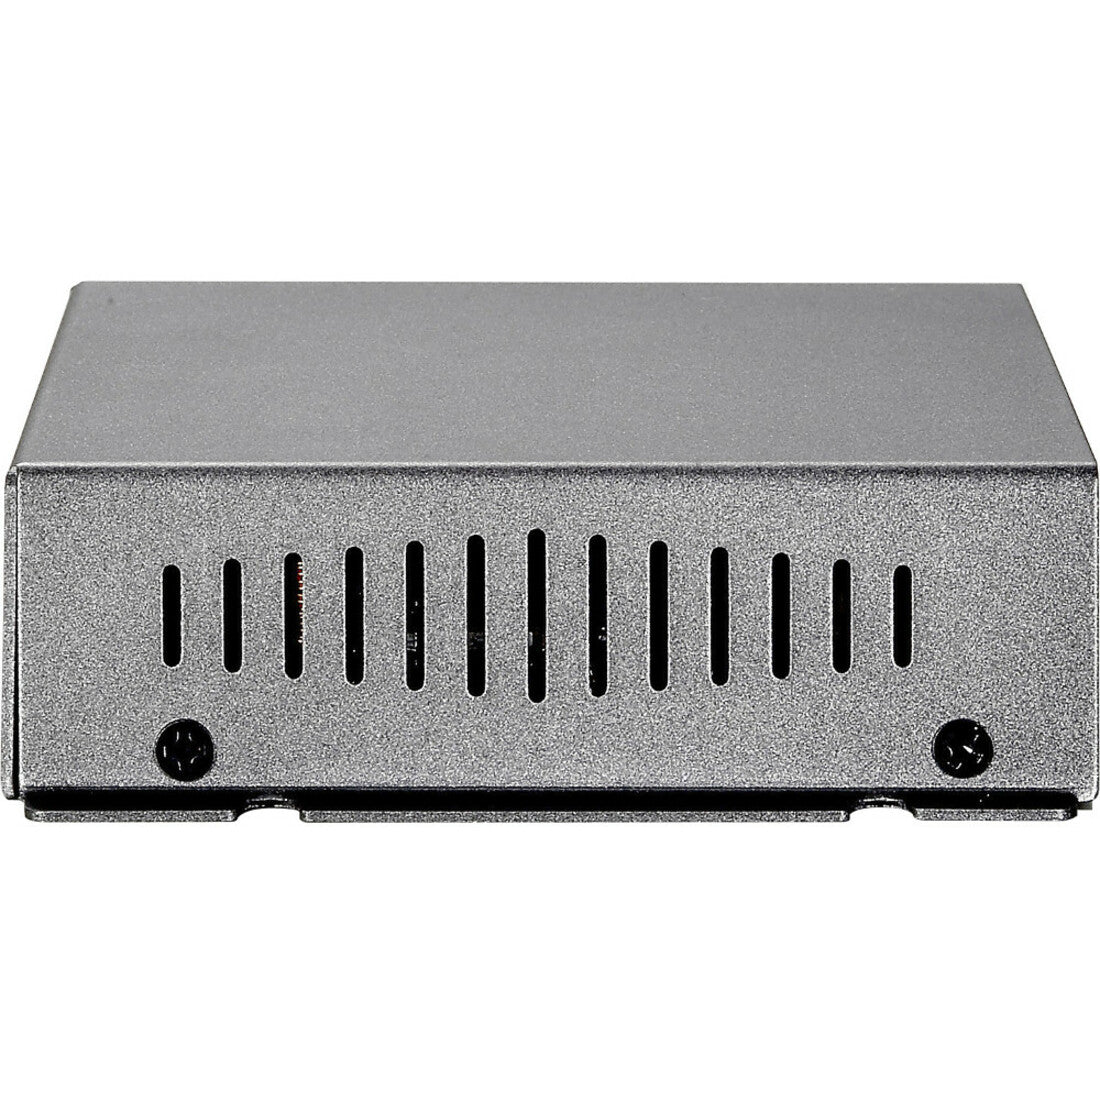 LevelOne POS-4000 Fast Ethernet High Power PoE Splitter, 12V DC Output